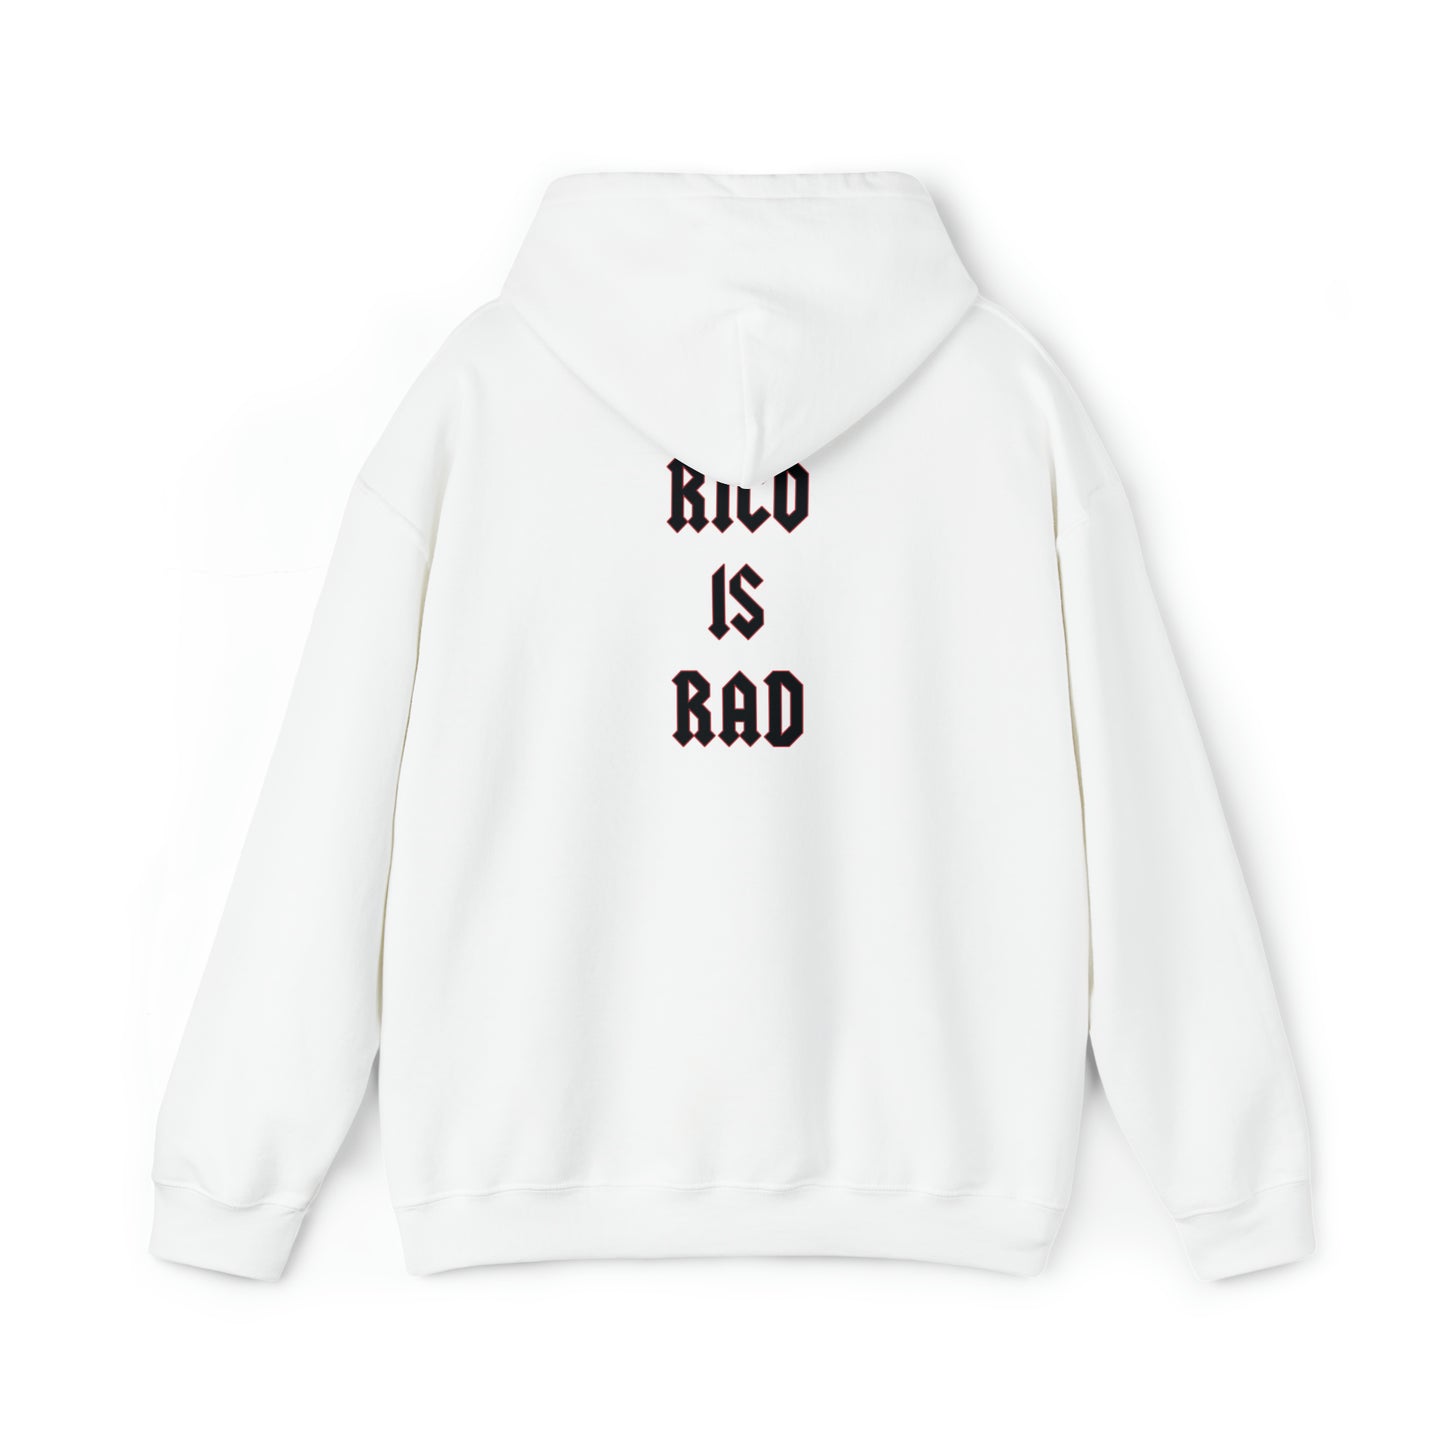 Rico is Rad Hooded Sweatshirt